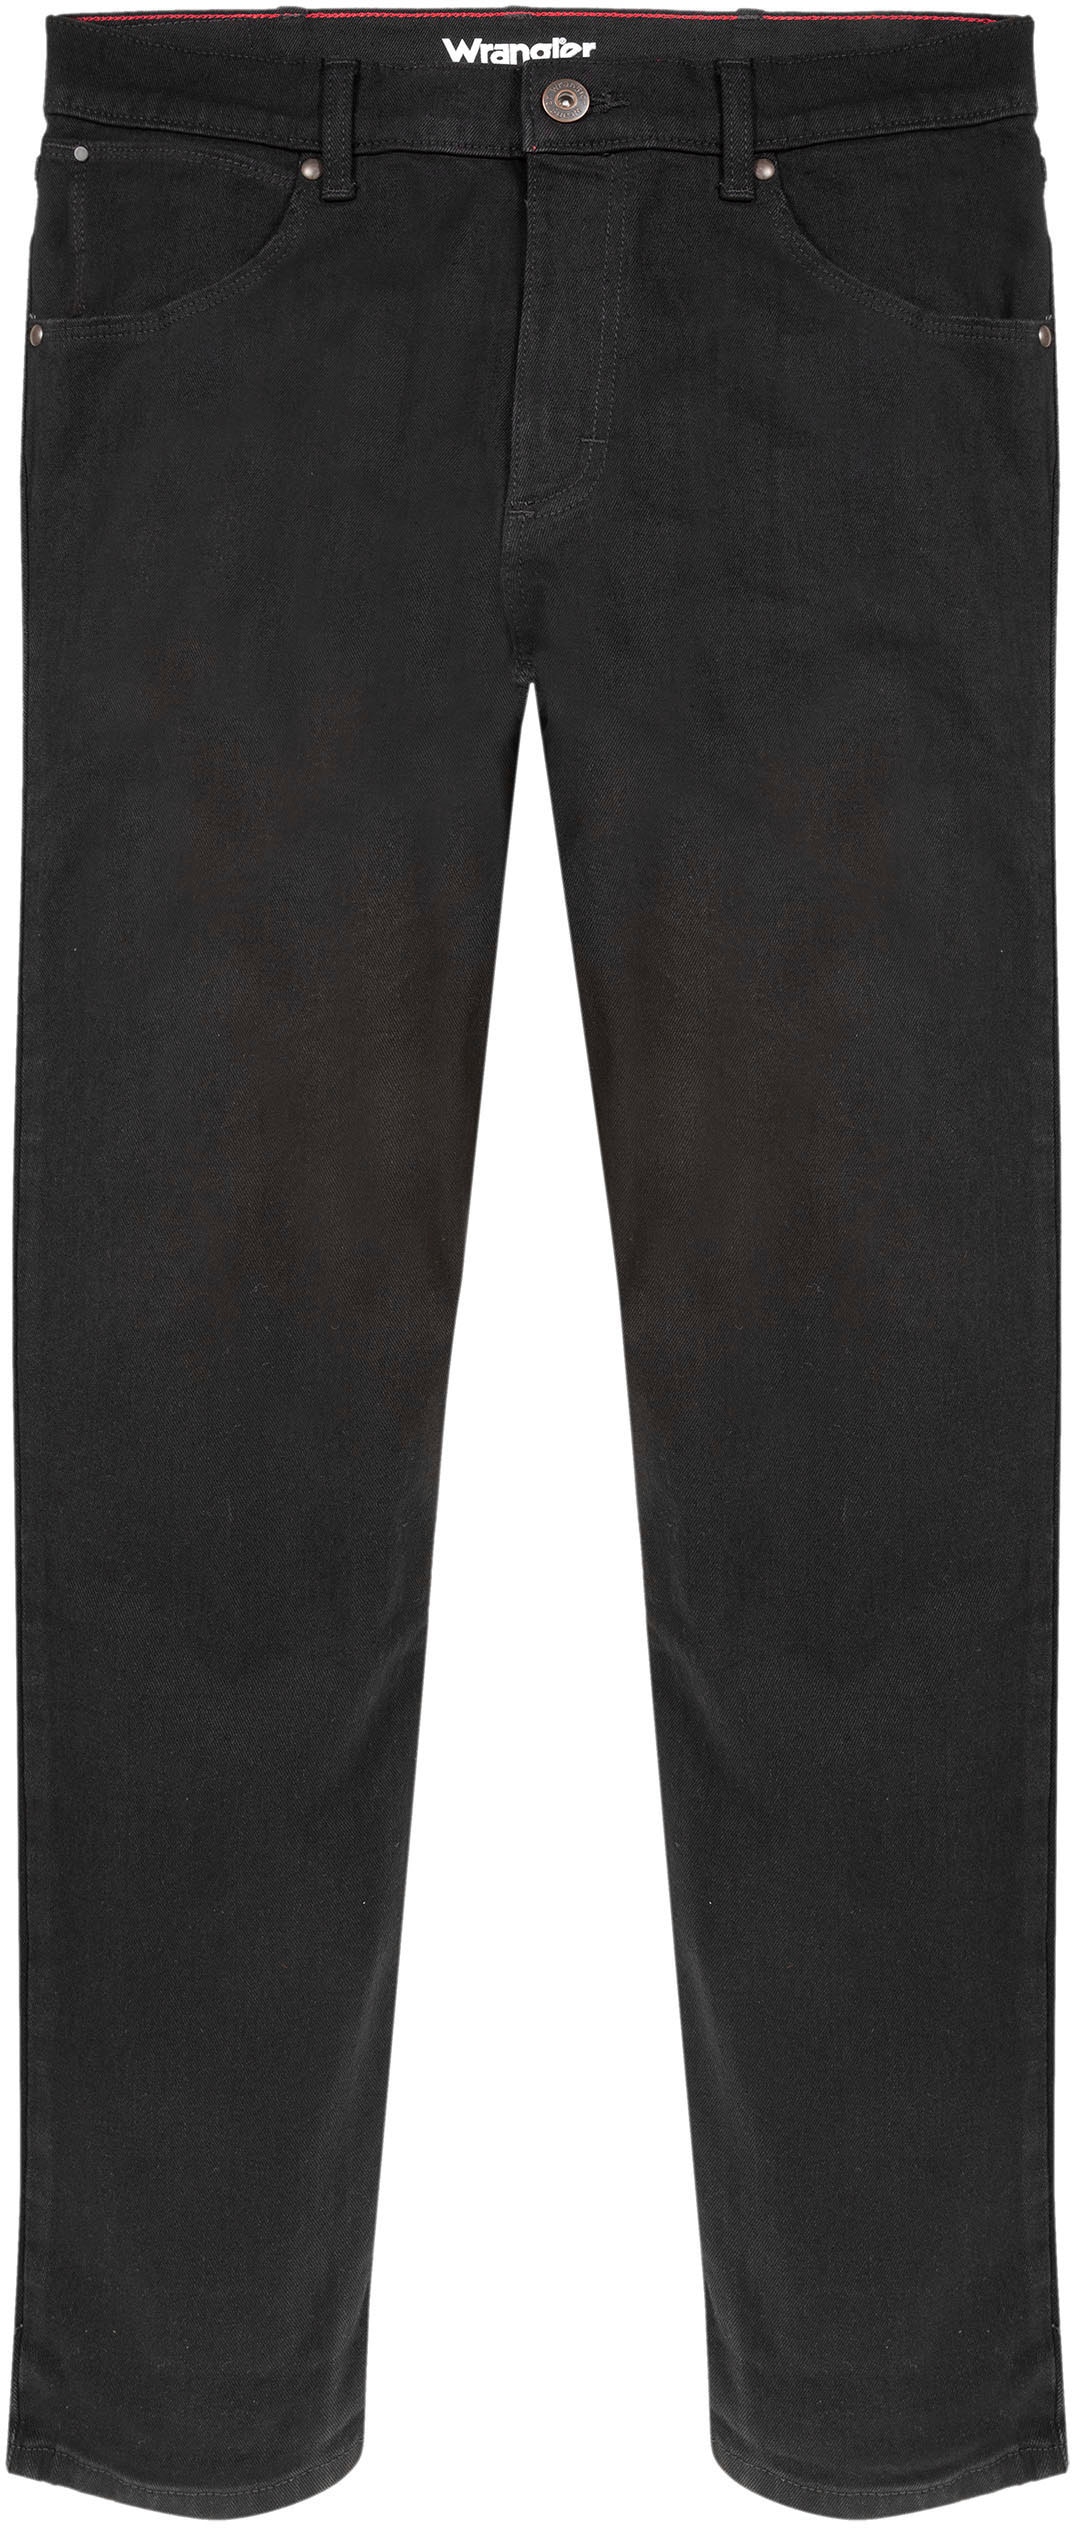 Wrangler Herren Authentic Regular fit Jeans, Schwarz (Black Rinse 107), 42W / 34L